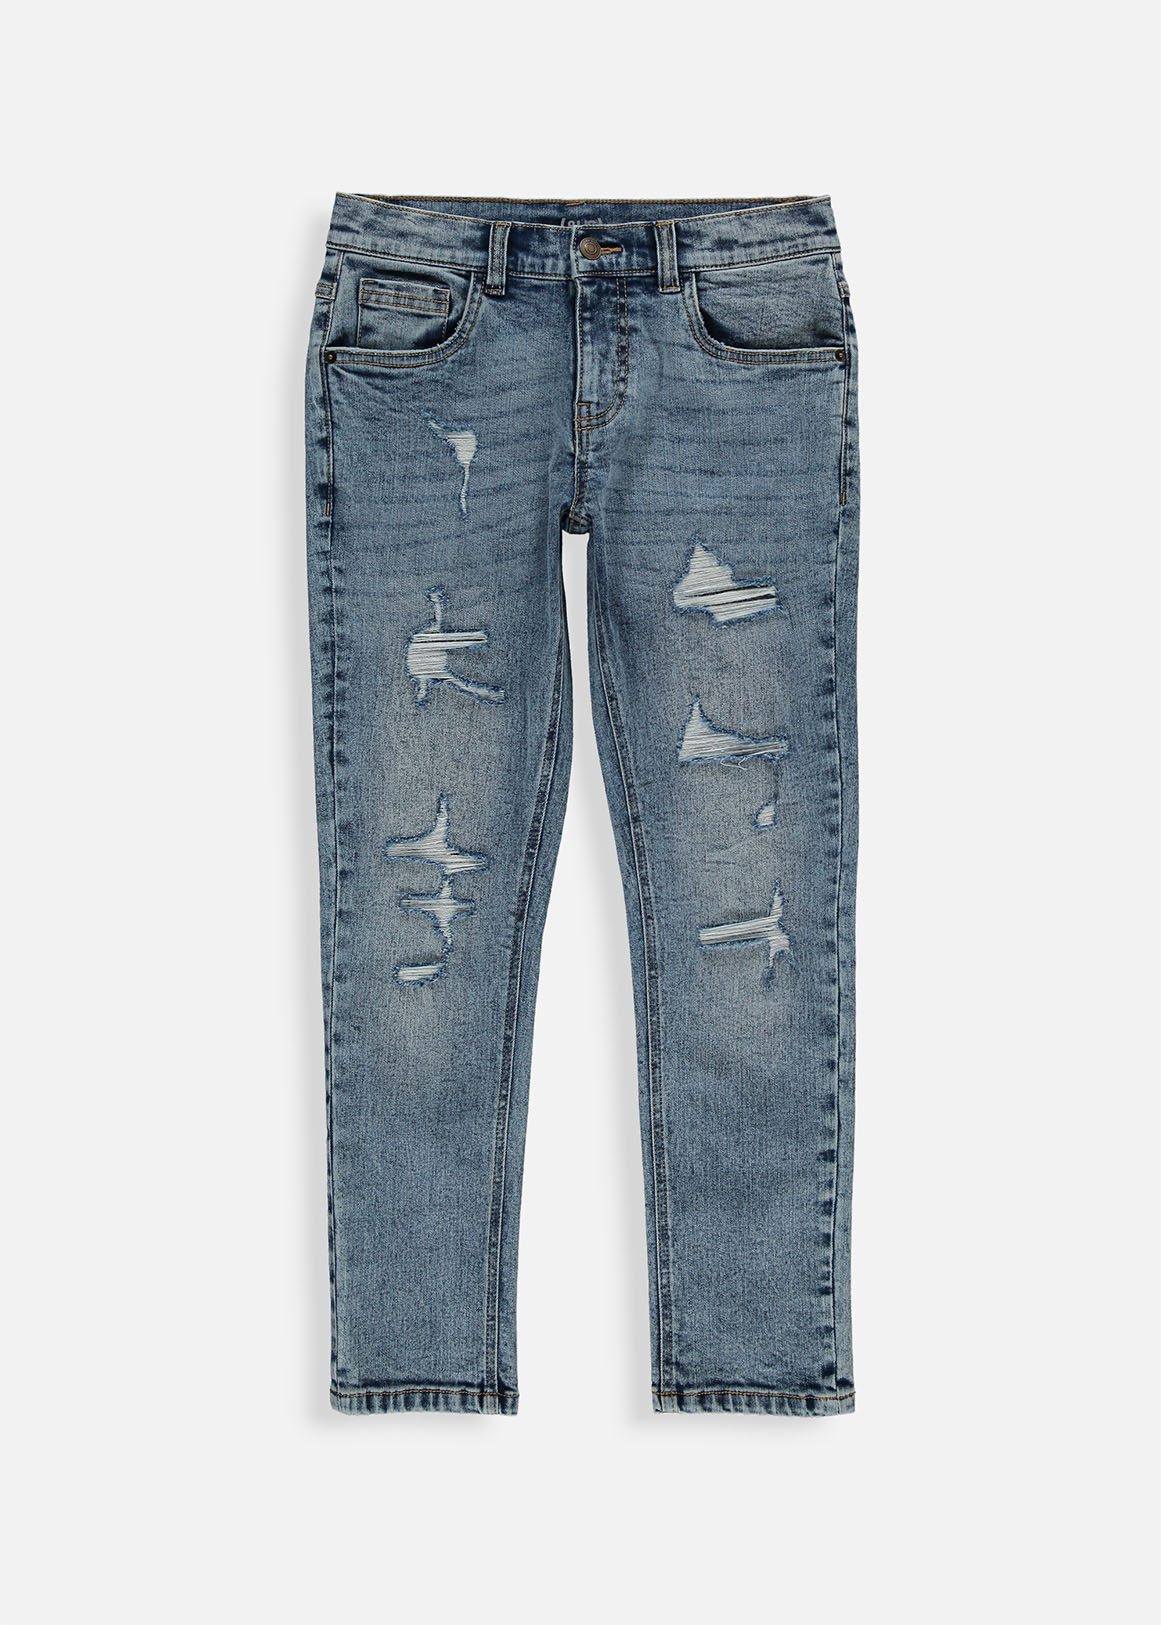 Adjustable Rip & Repair Jeans | Woolworths.co.za